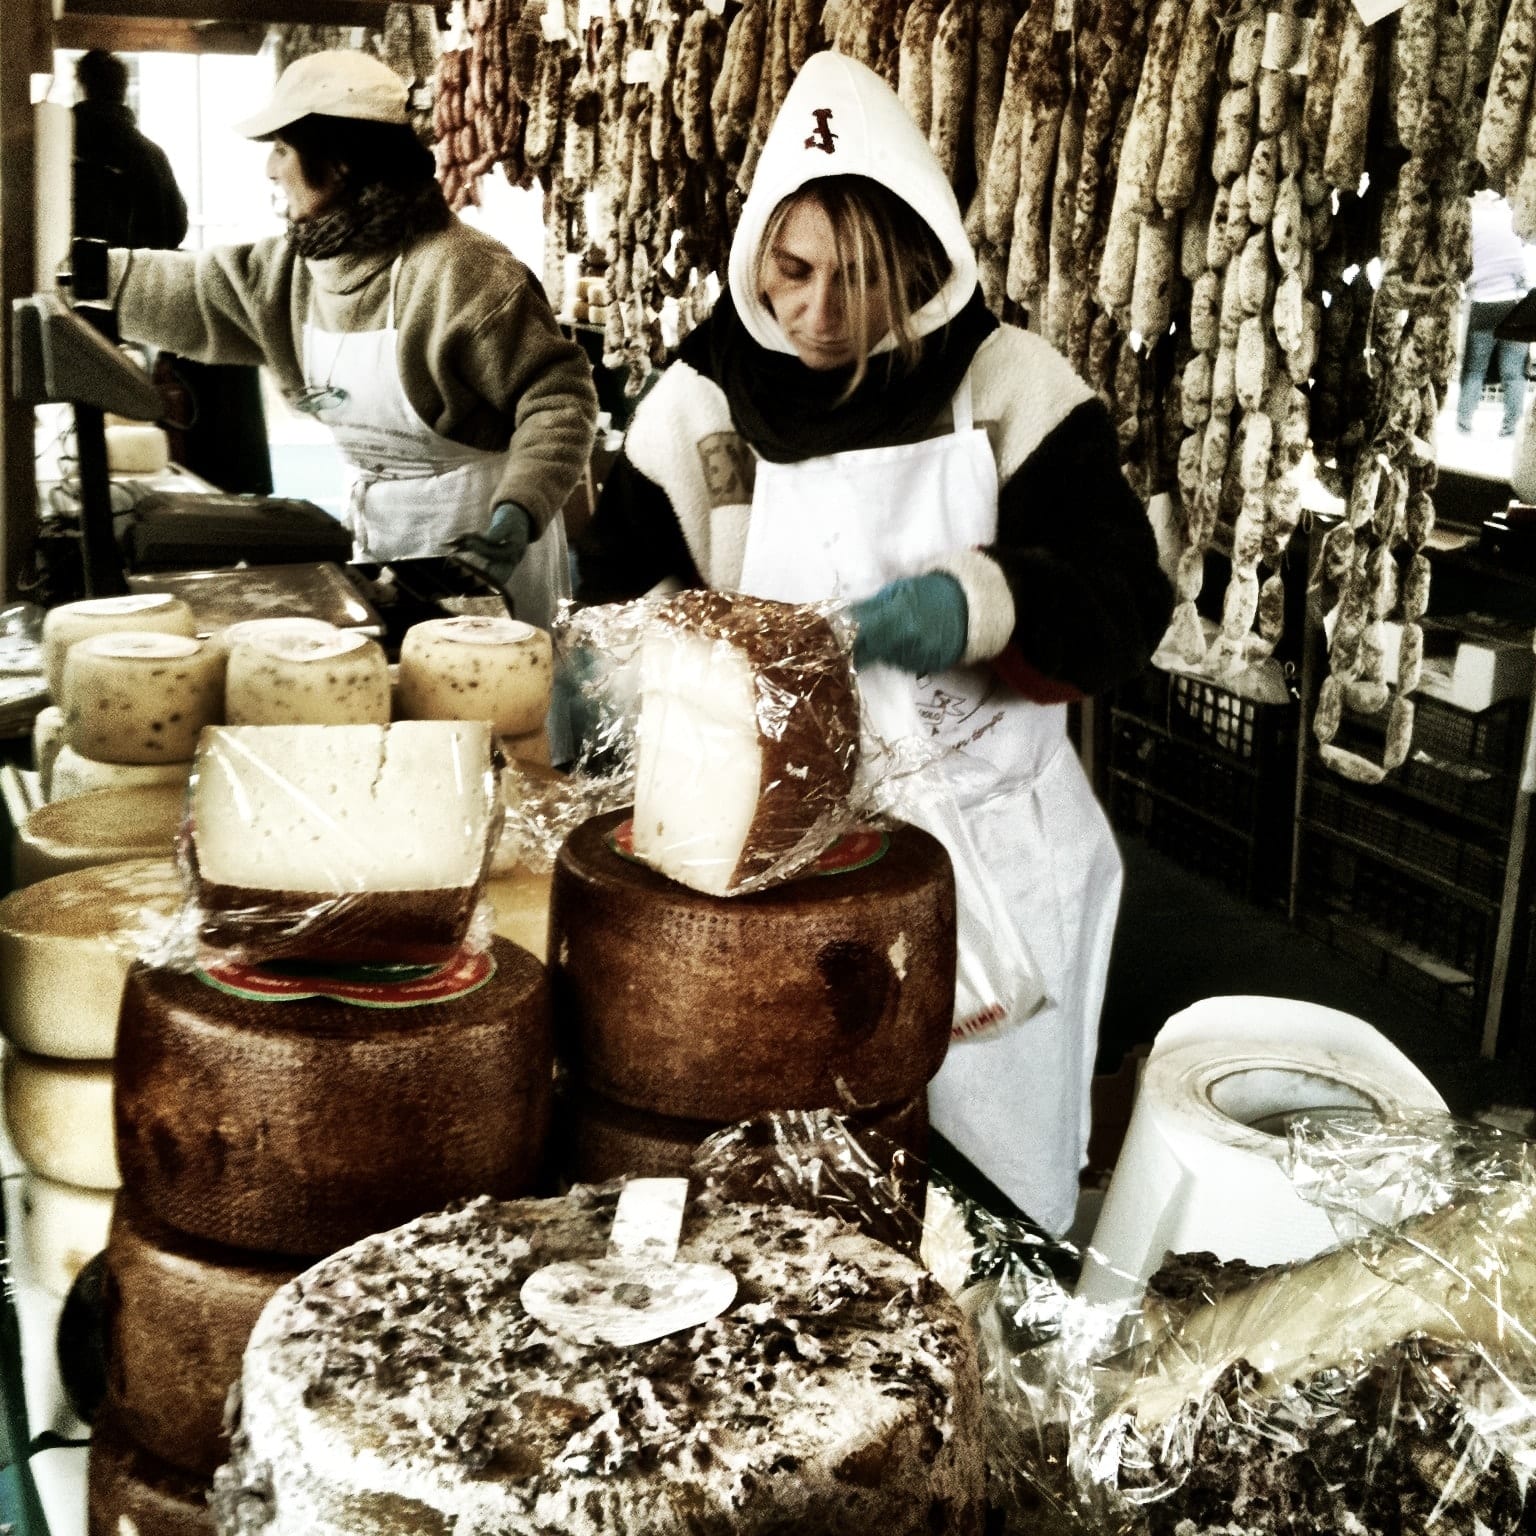 Salamis and Cheese in Sant'Agata Feltria